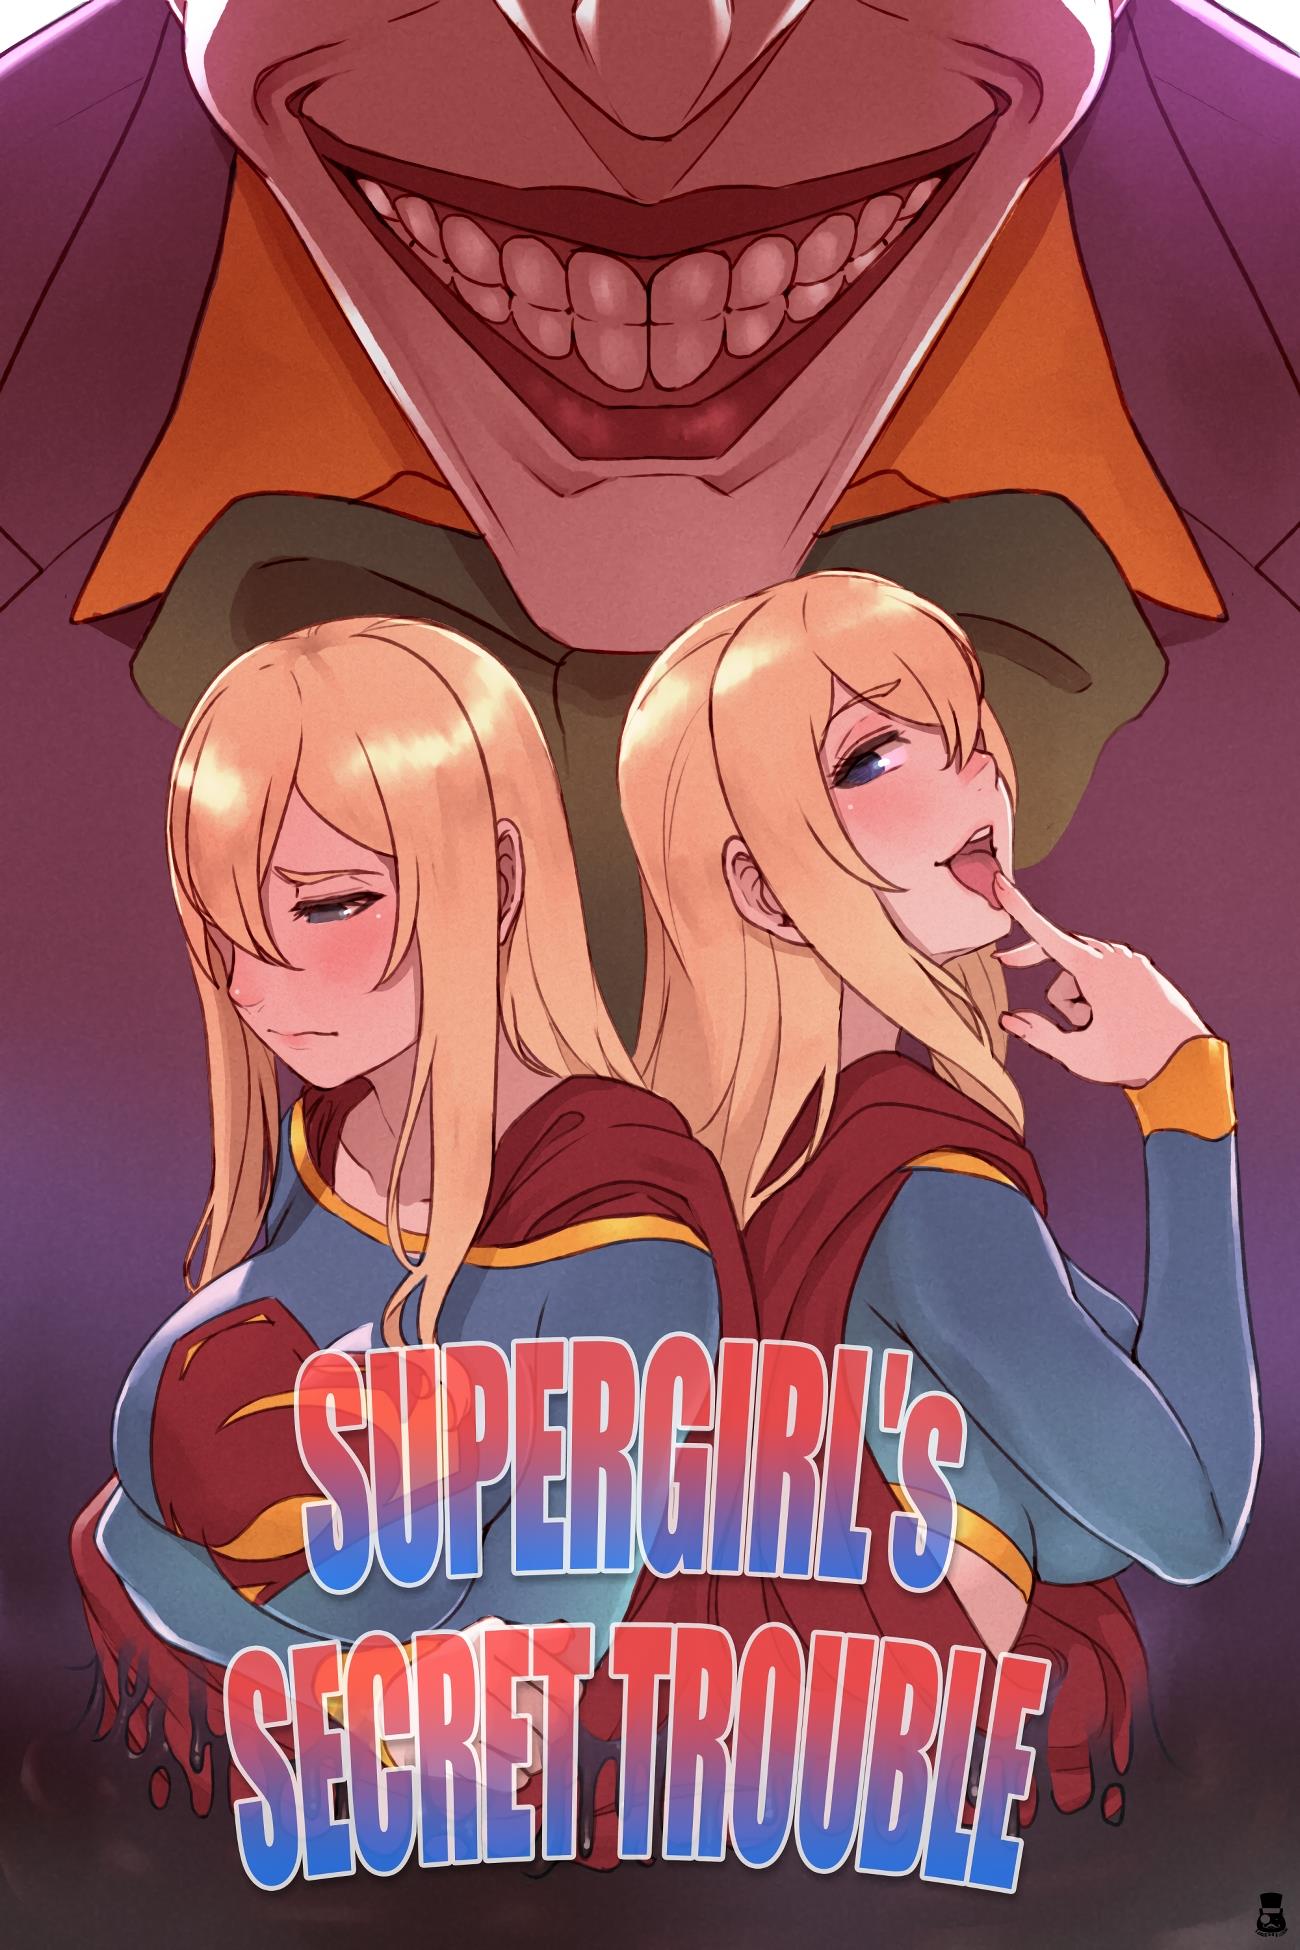 Supergirl’s Secret Trouble [Mr.takealook]